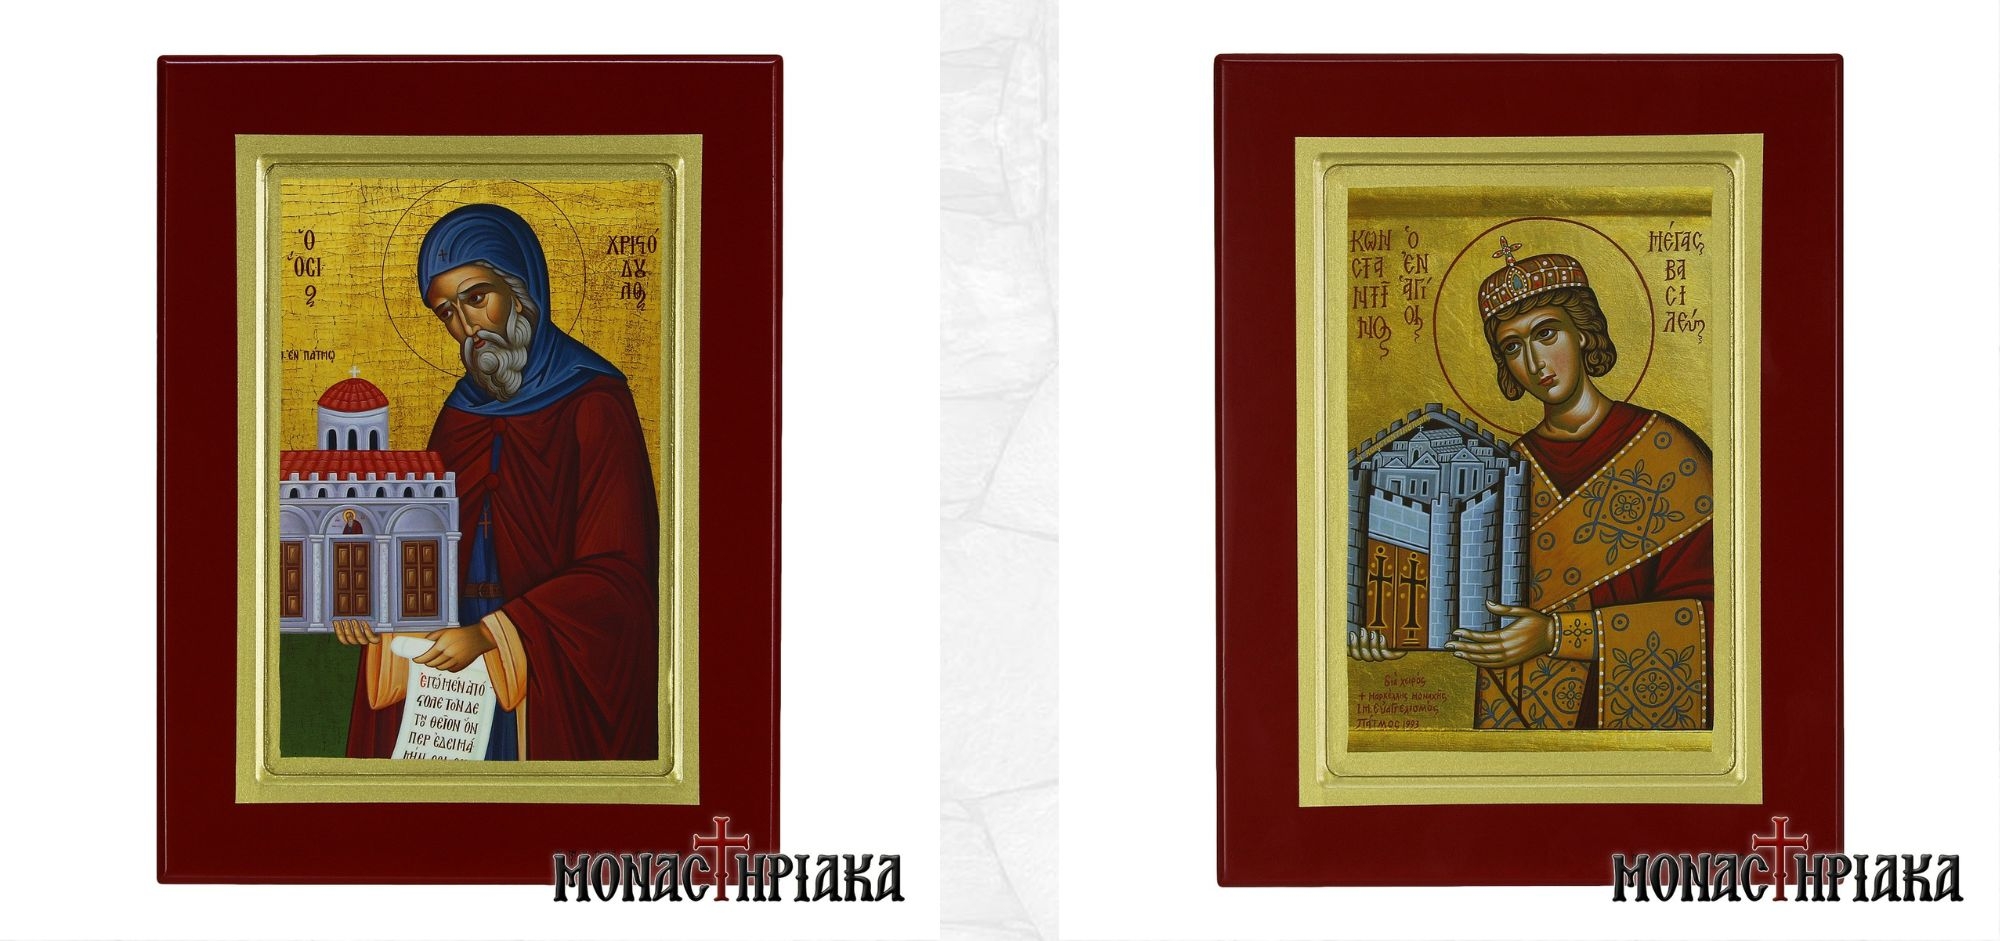 Saint Constantine and Saint Christodulos